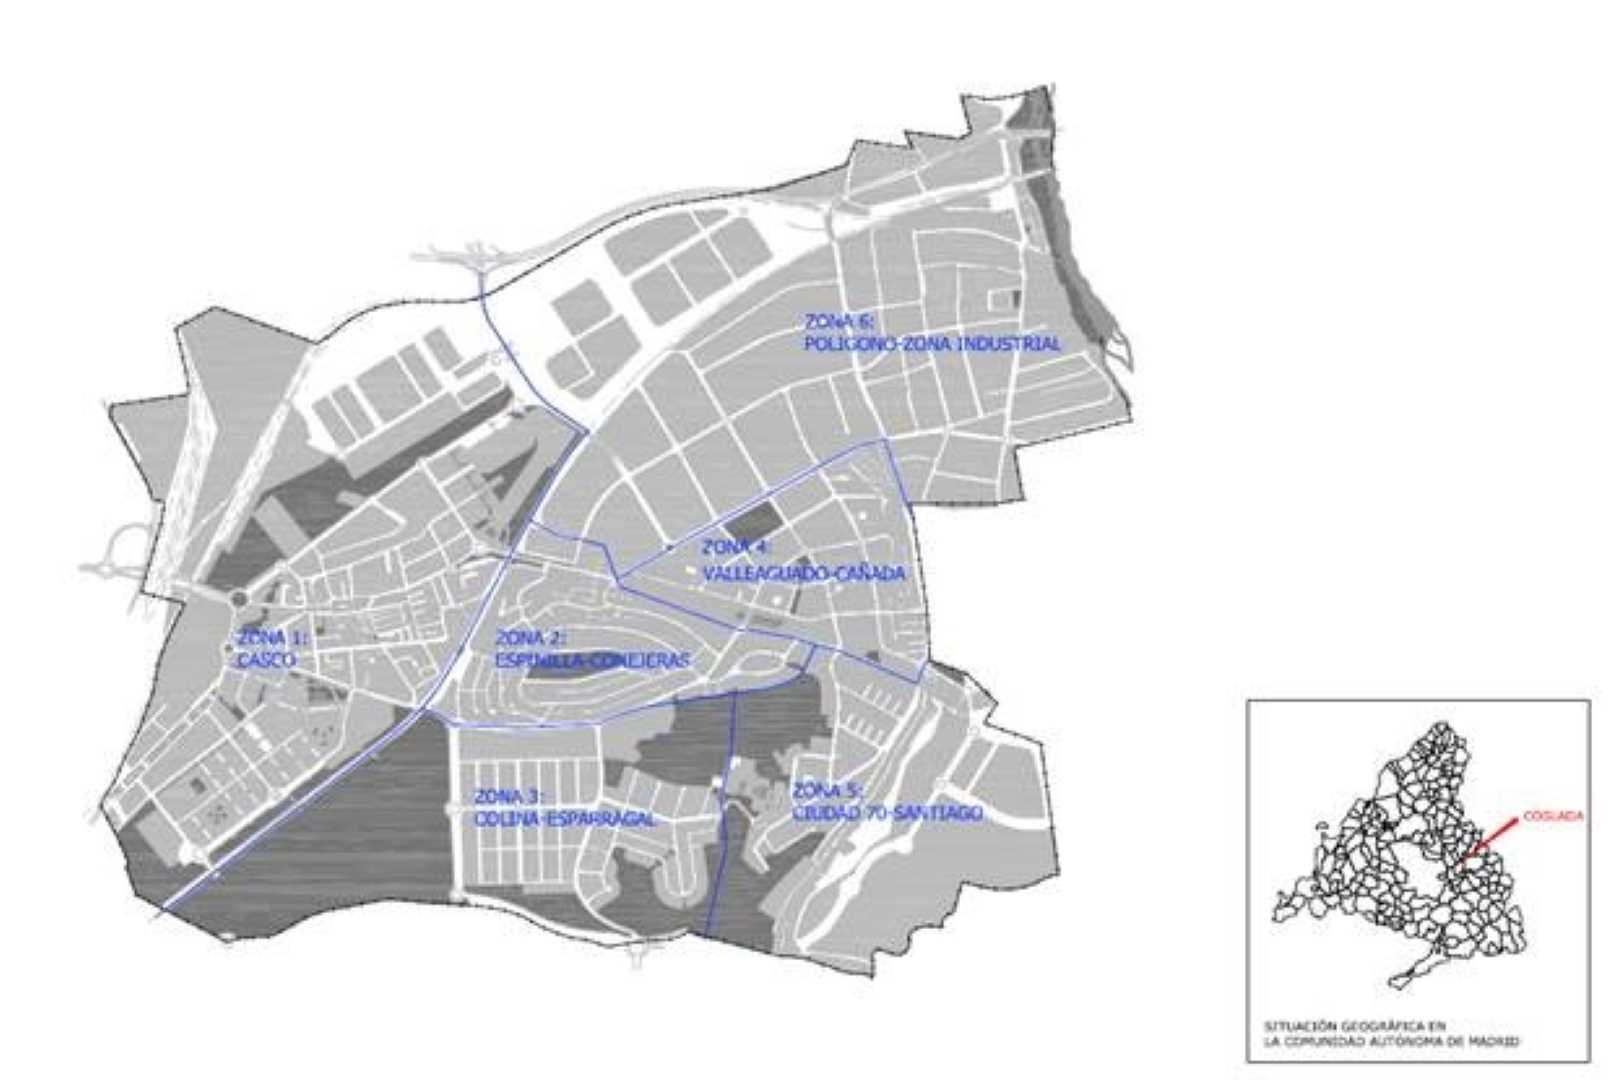 Plan Asfaltado de Coslada, 330.000 metros cuadrados de asfalto renovado - Eiffage Infraestructuras - plano